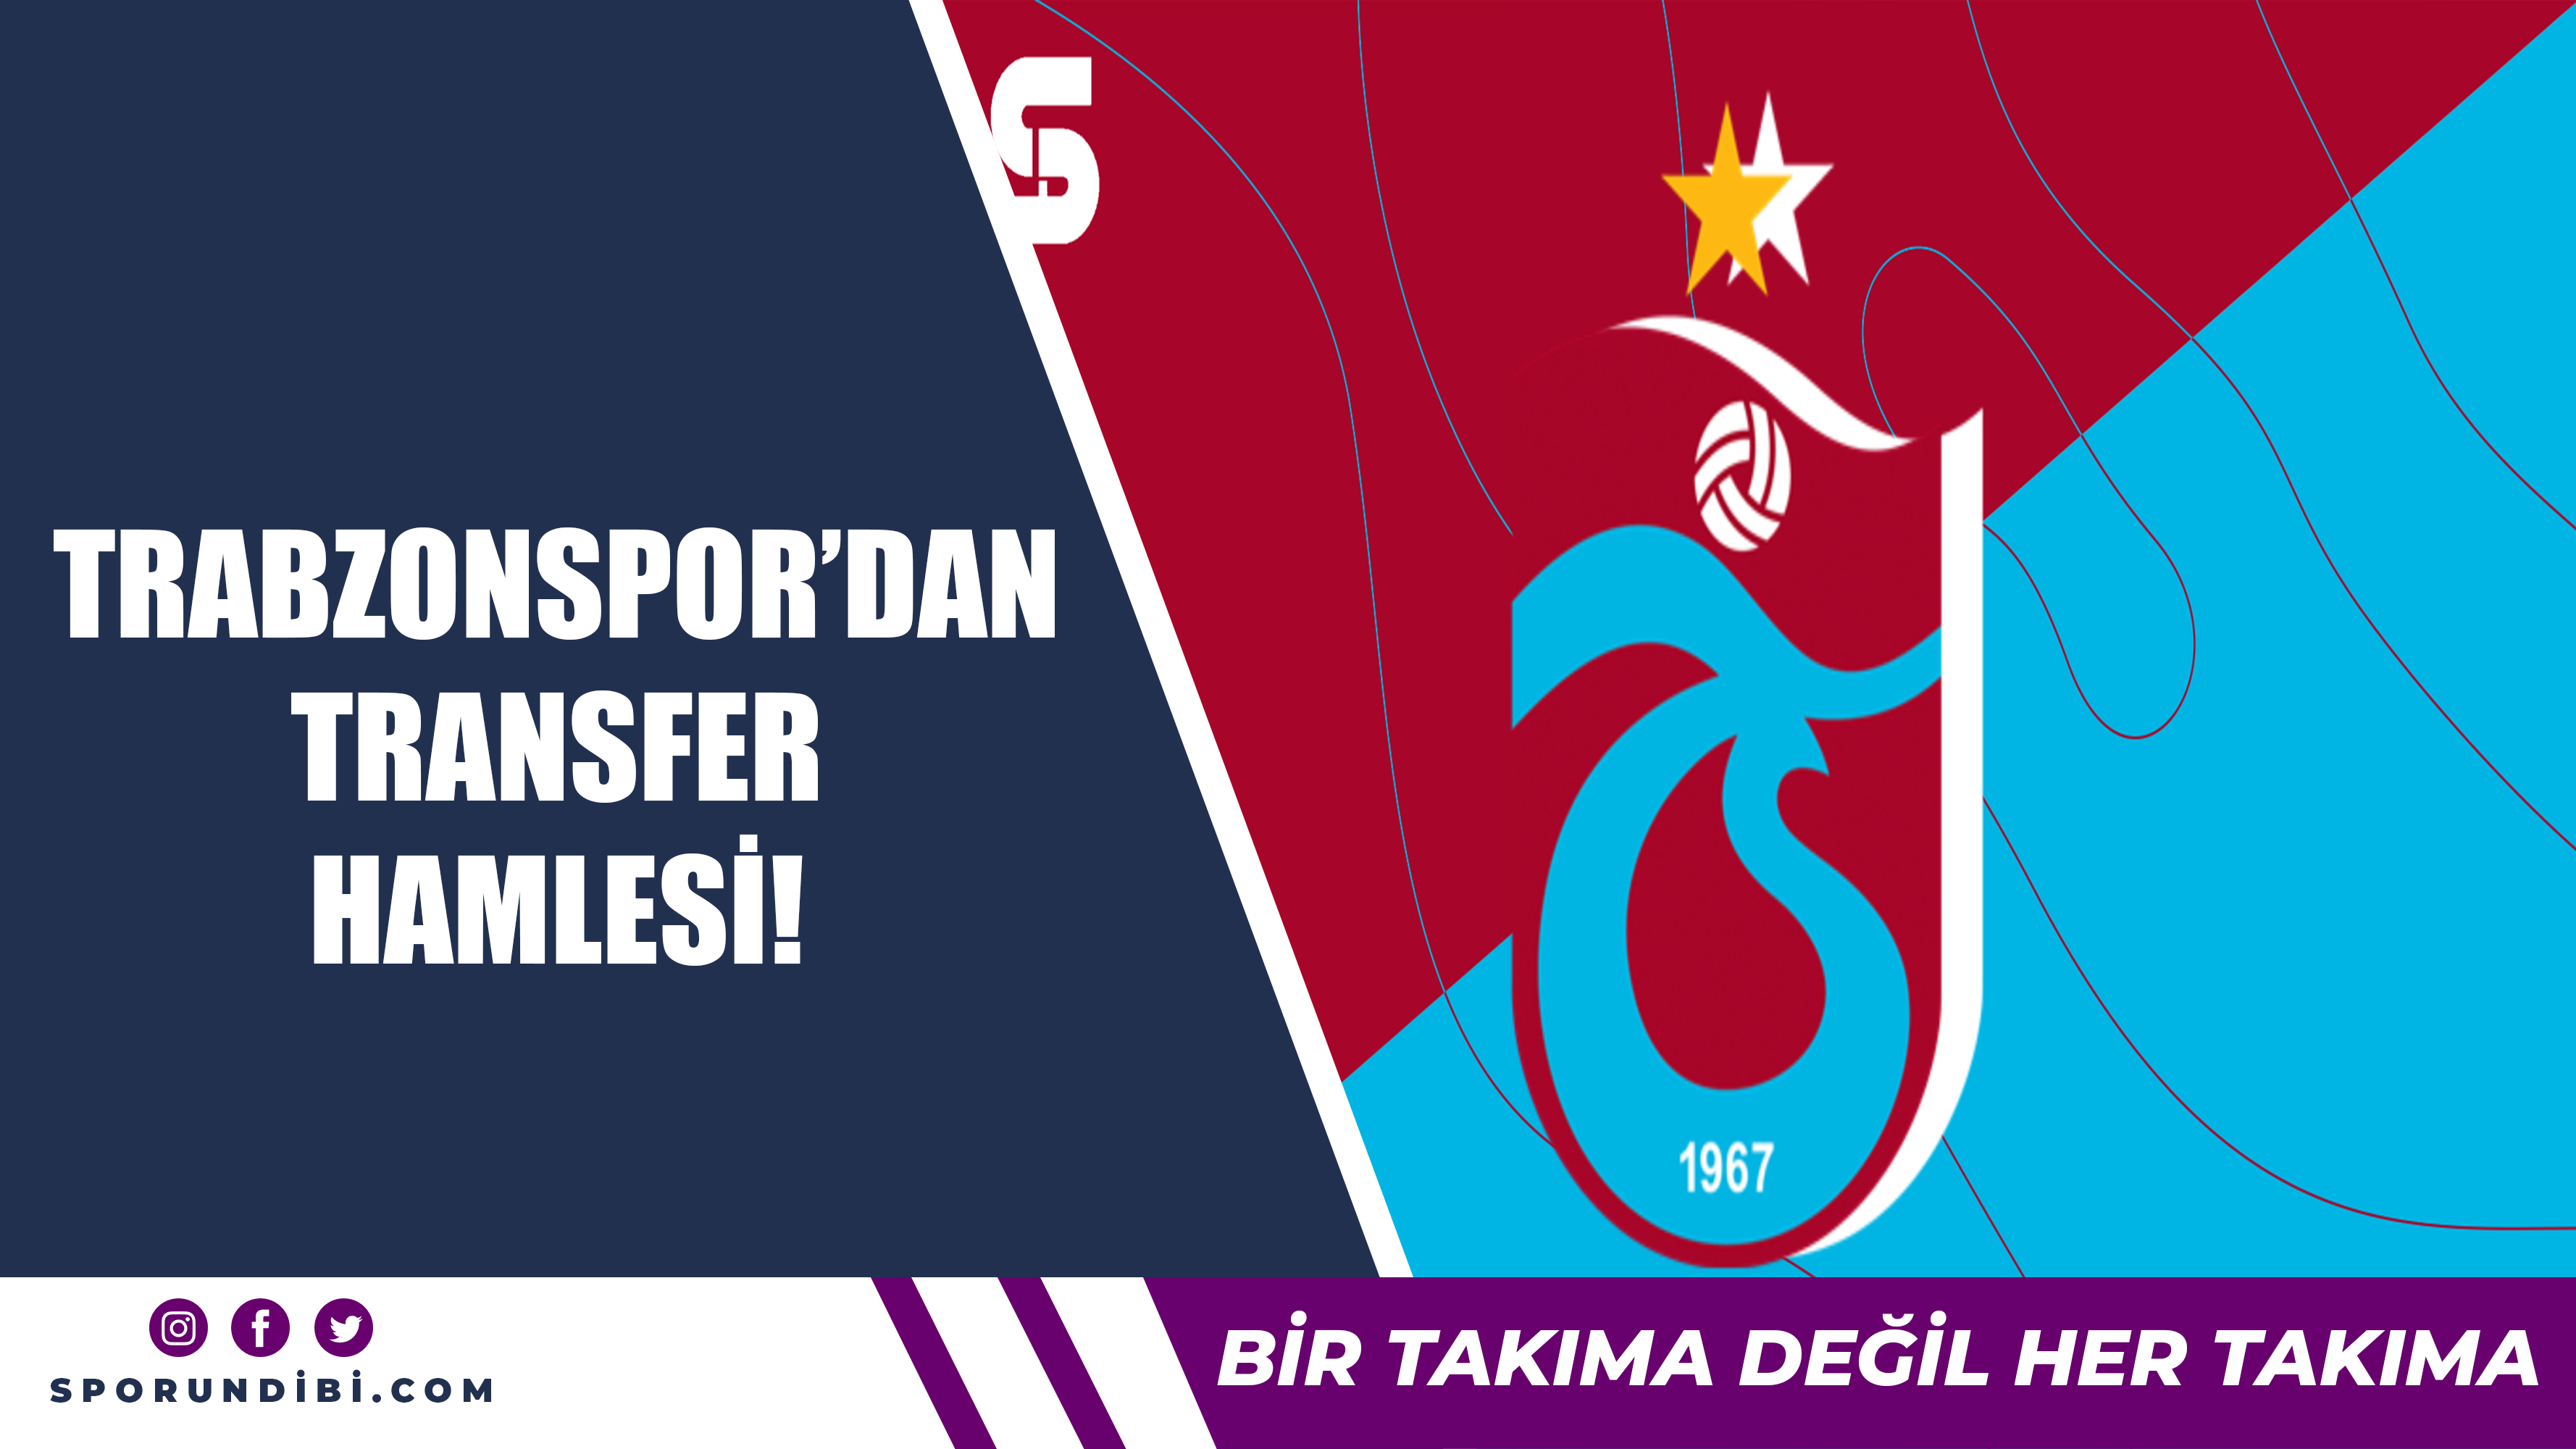 Trabzonspor'dan transfer hamlesi!